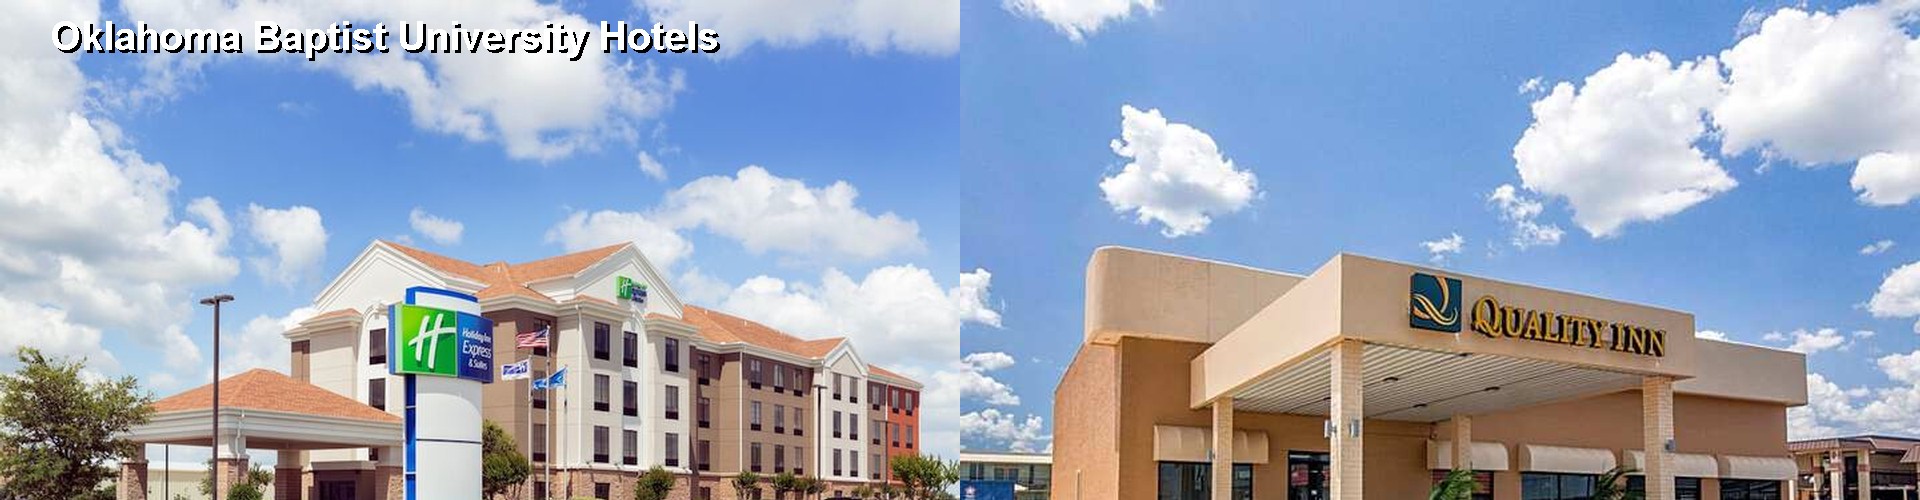 4 Best Hotels near Oklahoma Baptist University